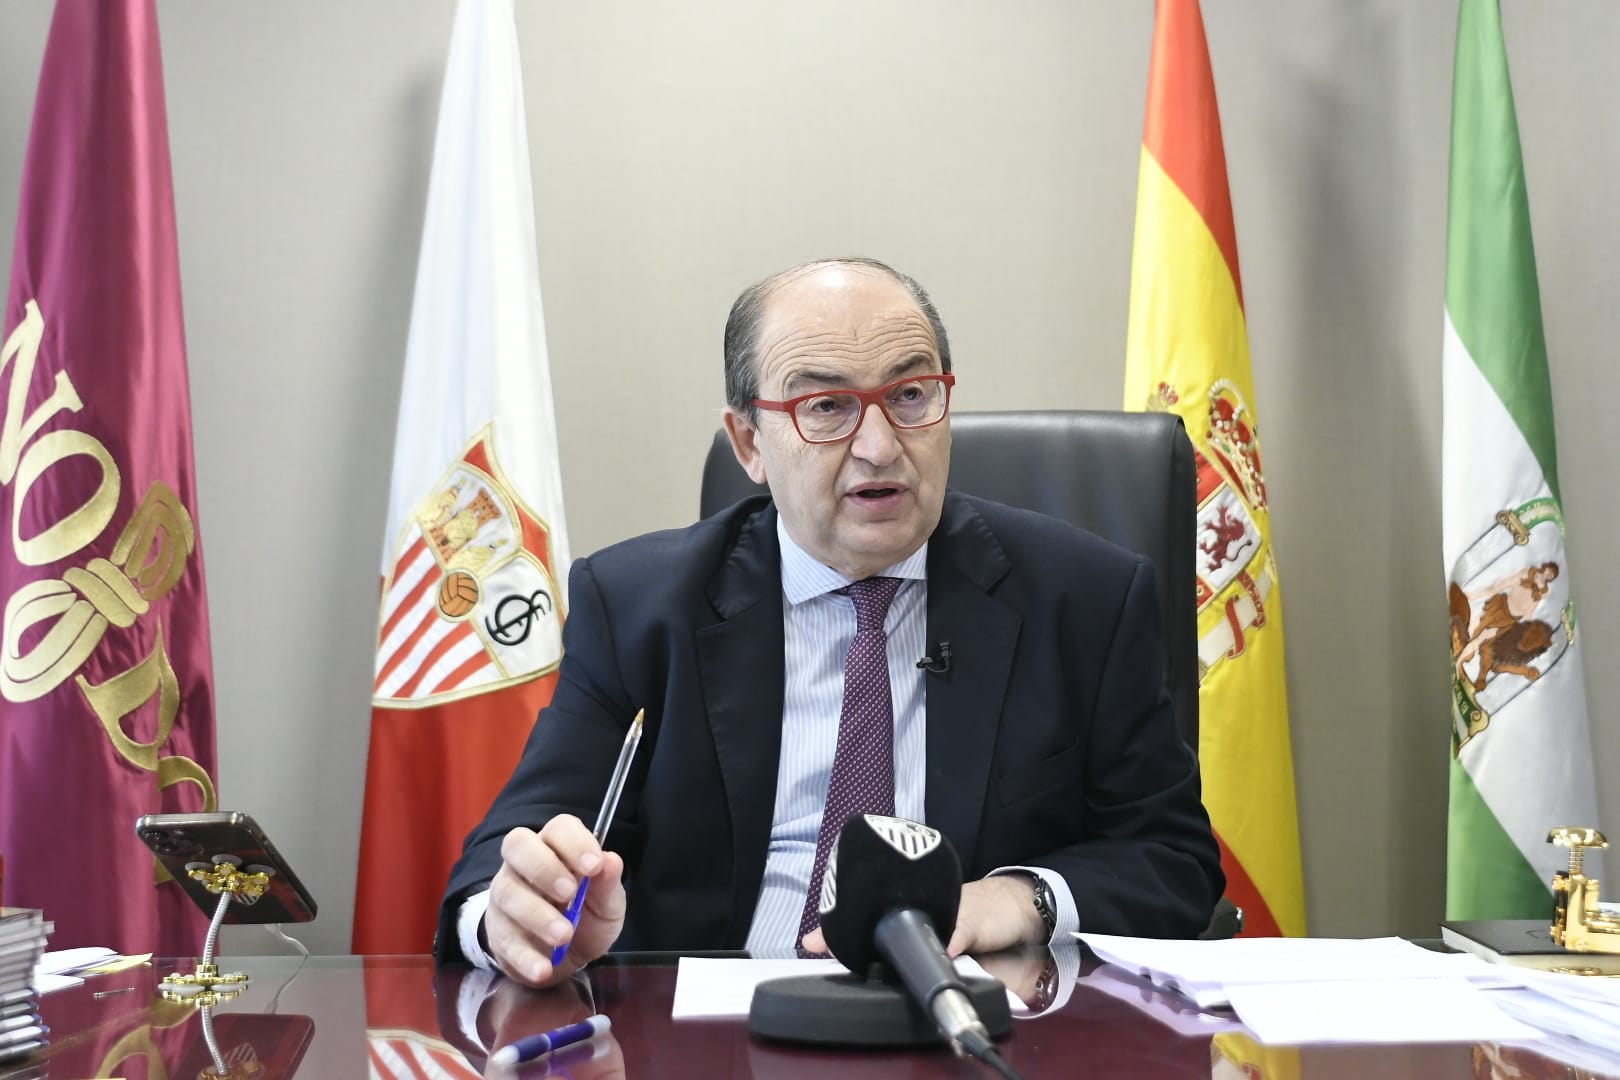 José Castro attends Sevilla FC Radio from his office